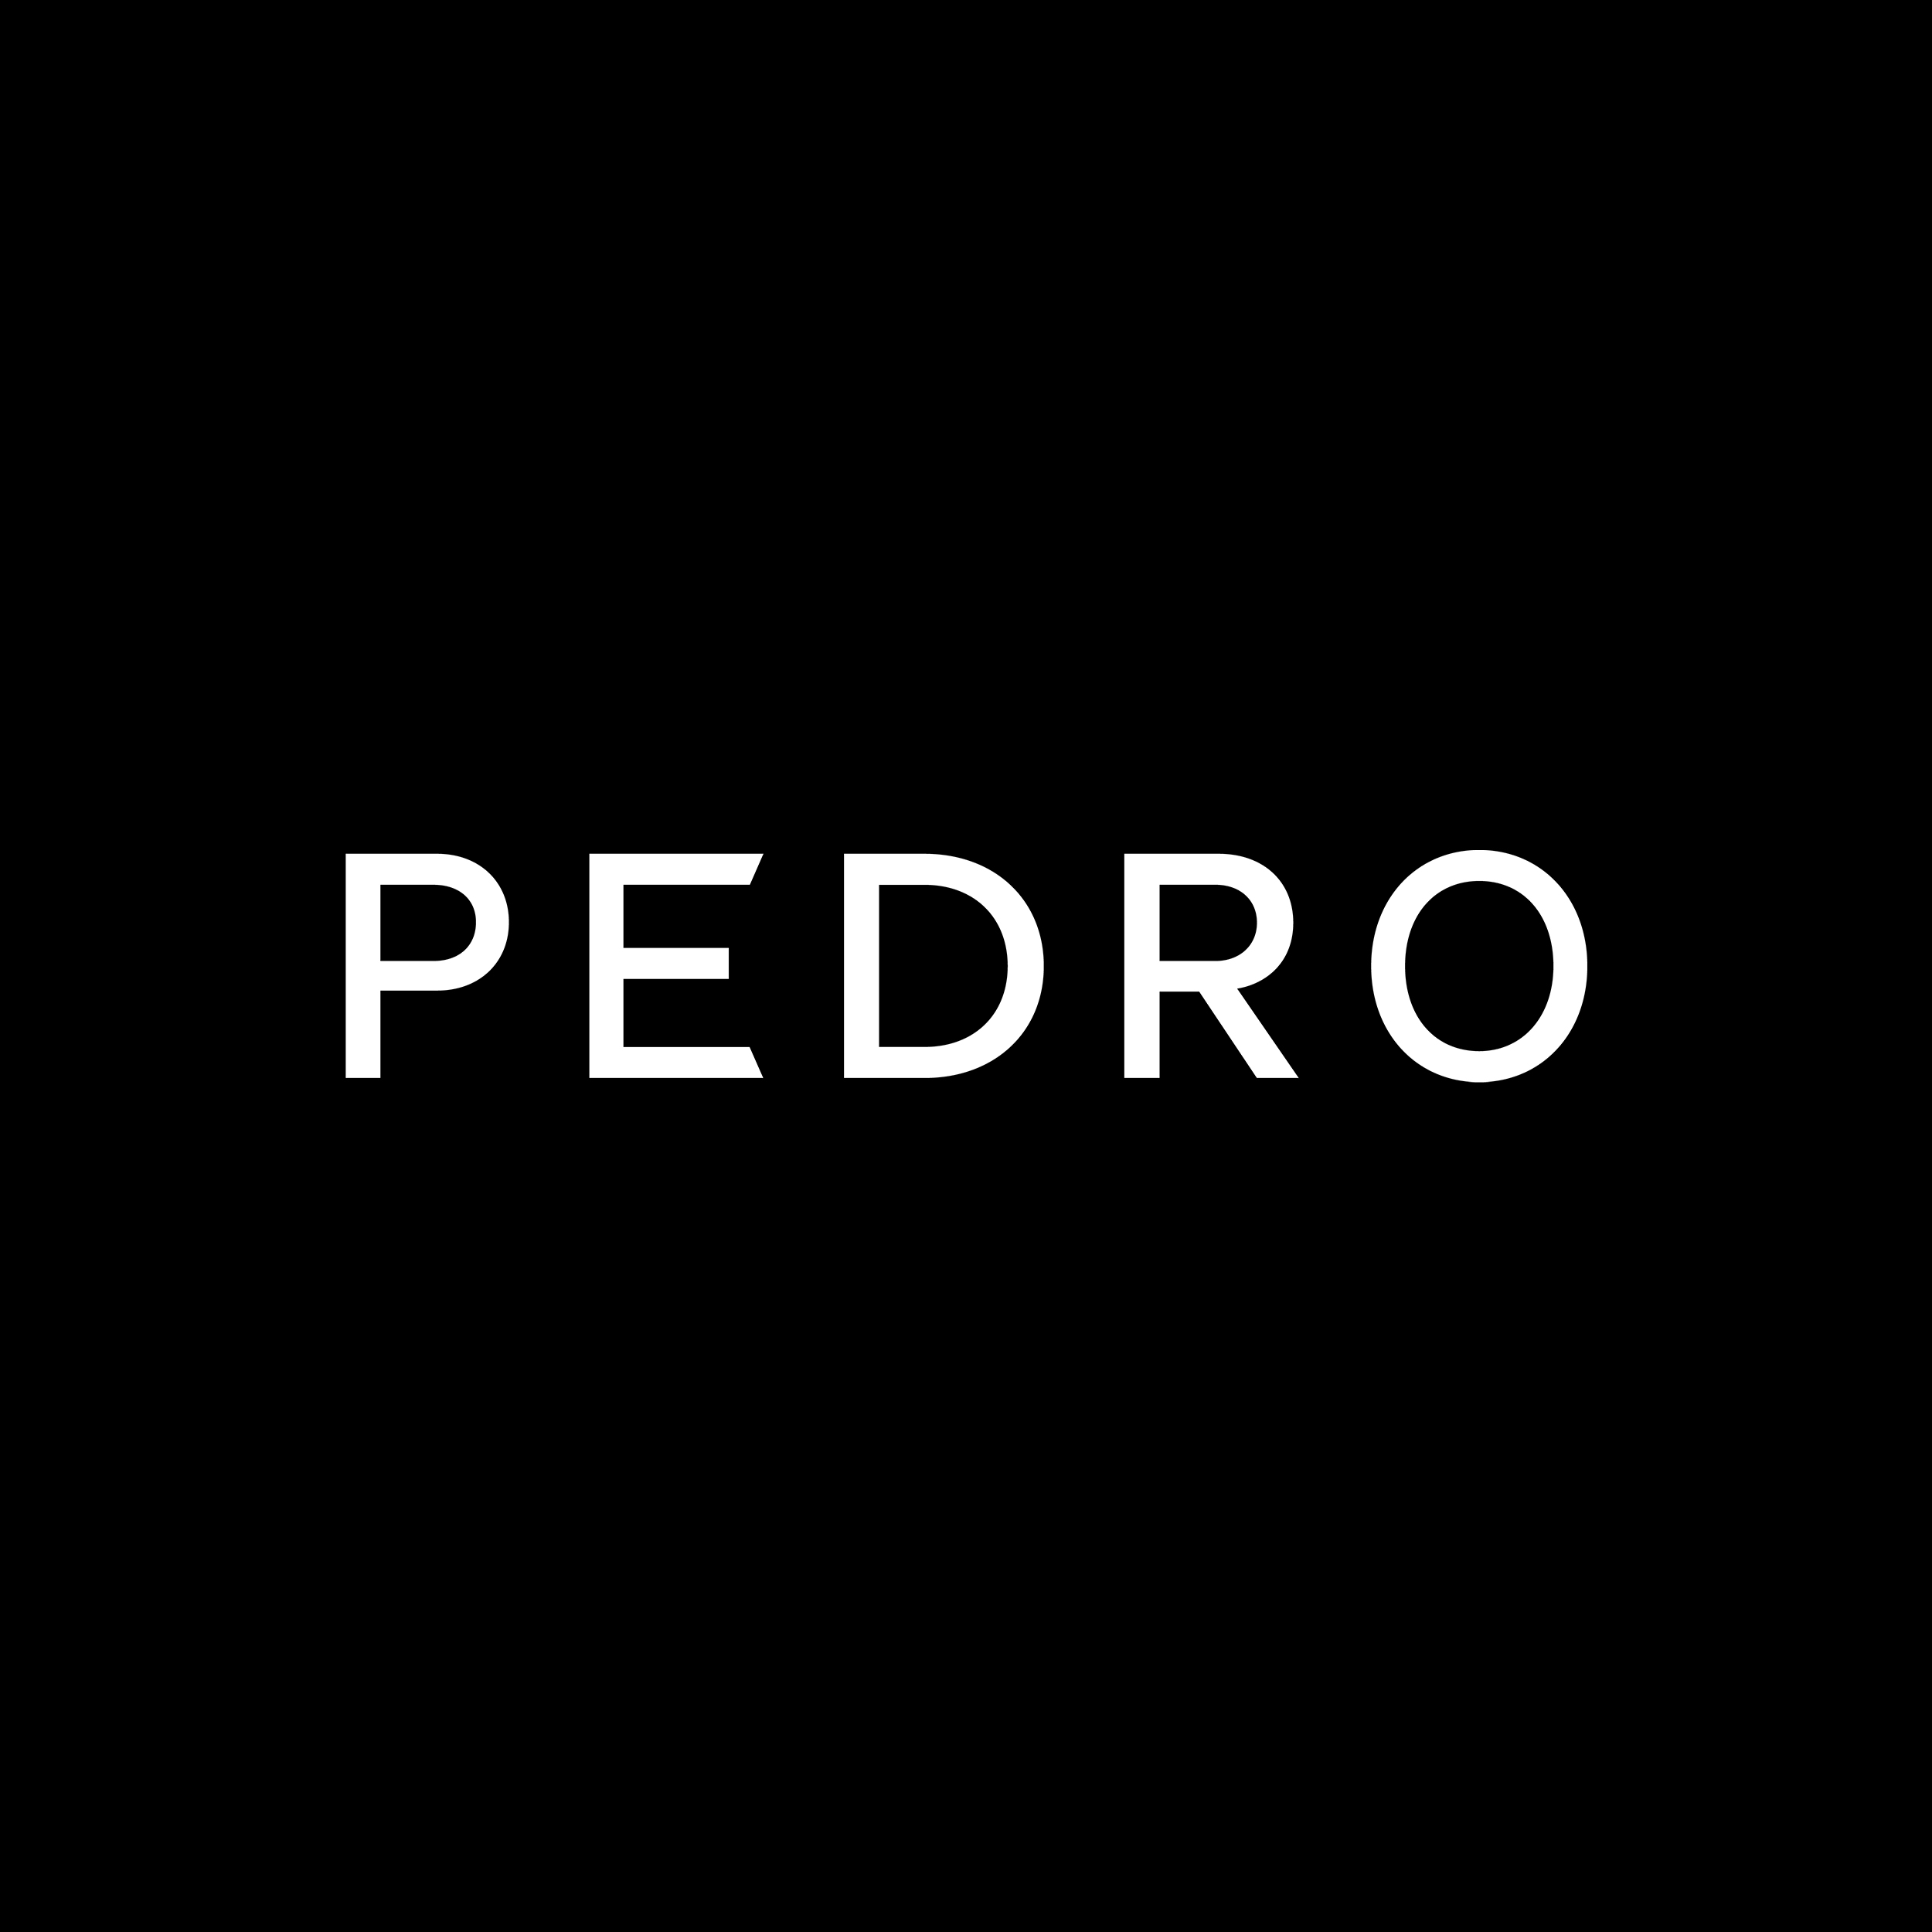 2500x2500px-PEDRO logo.jpg